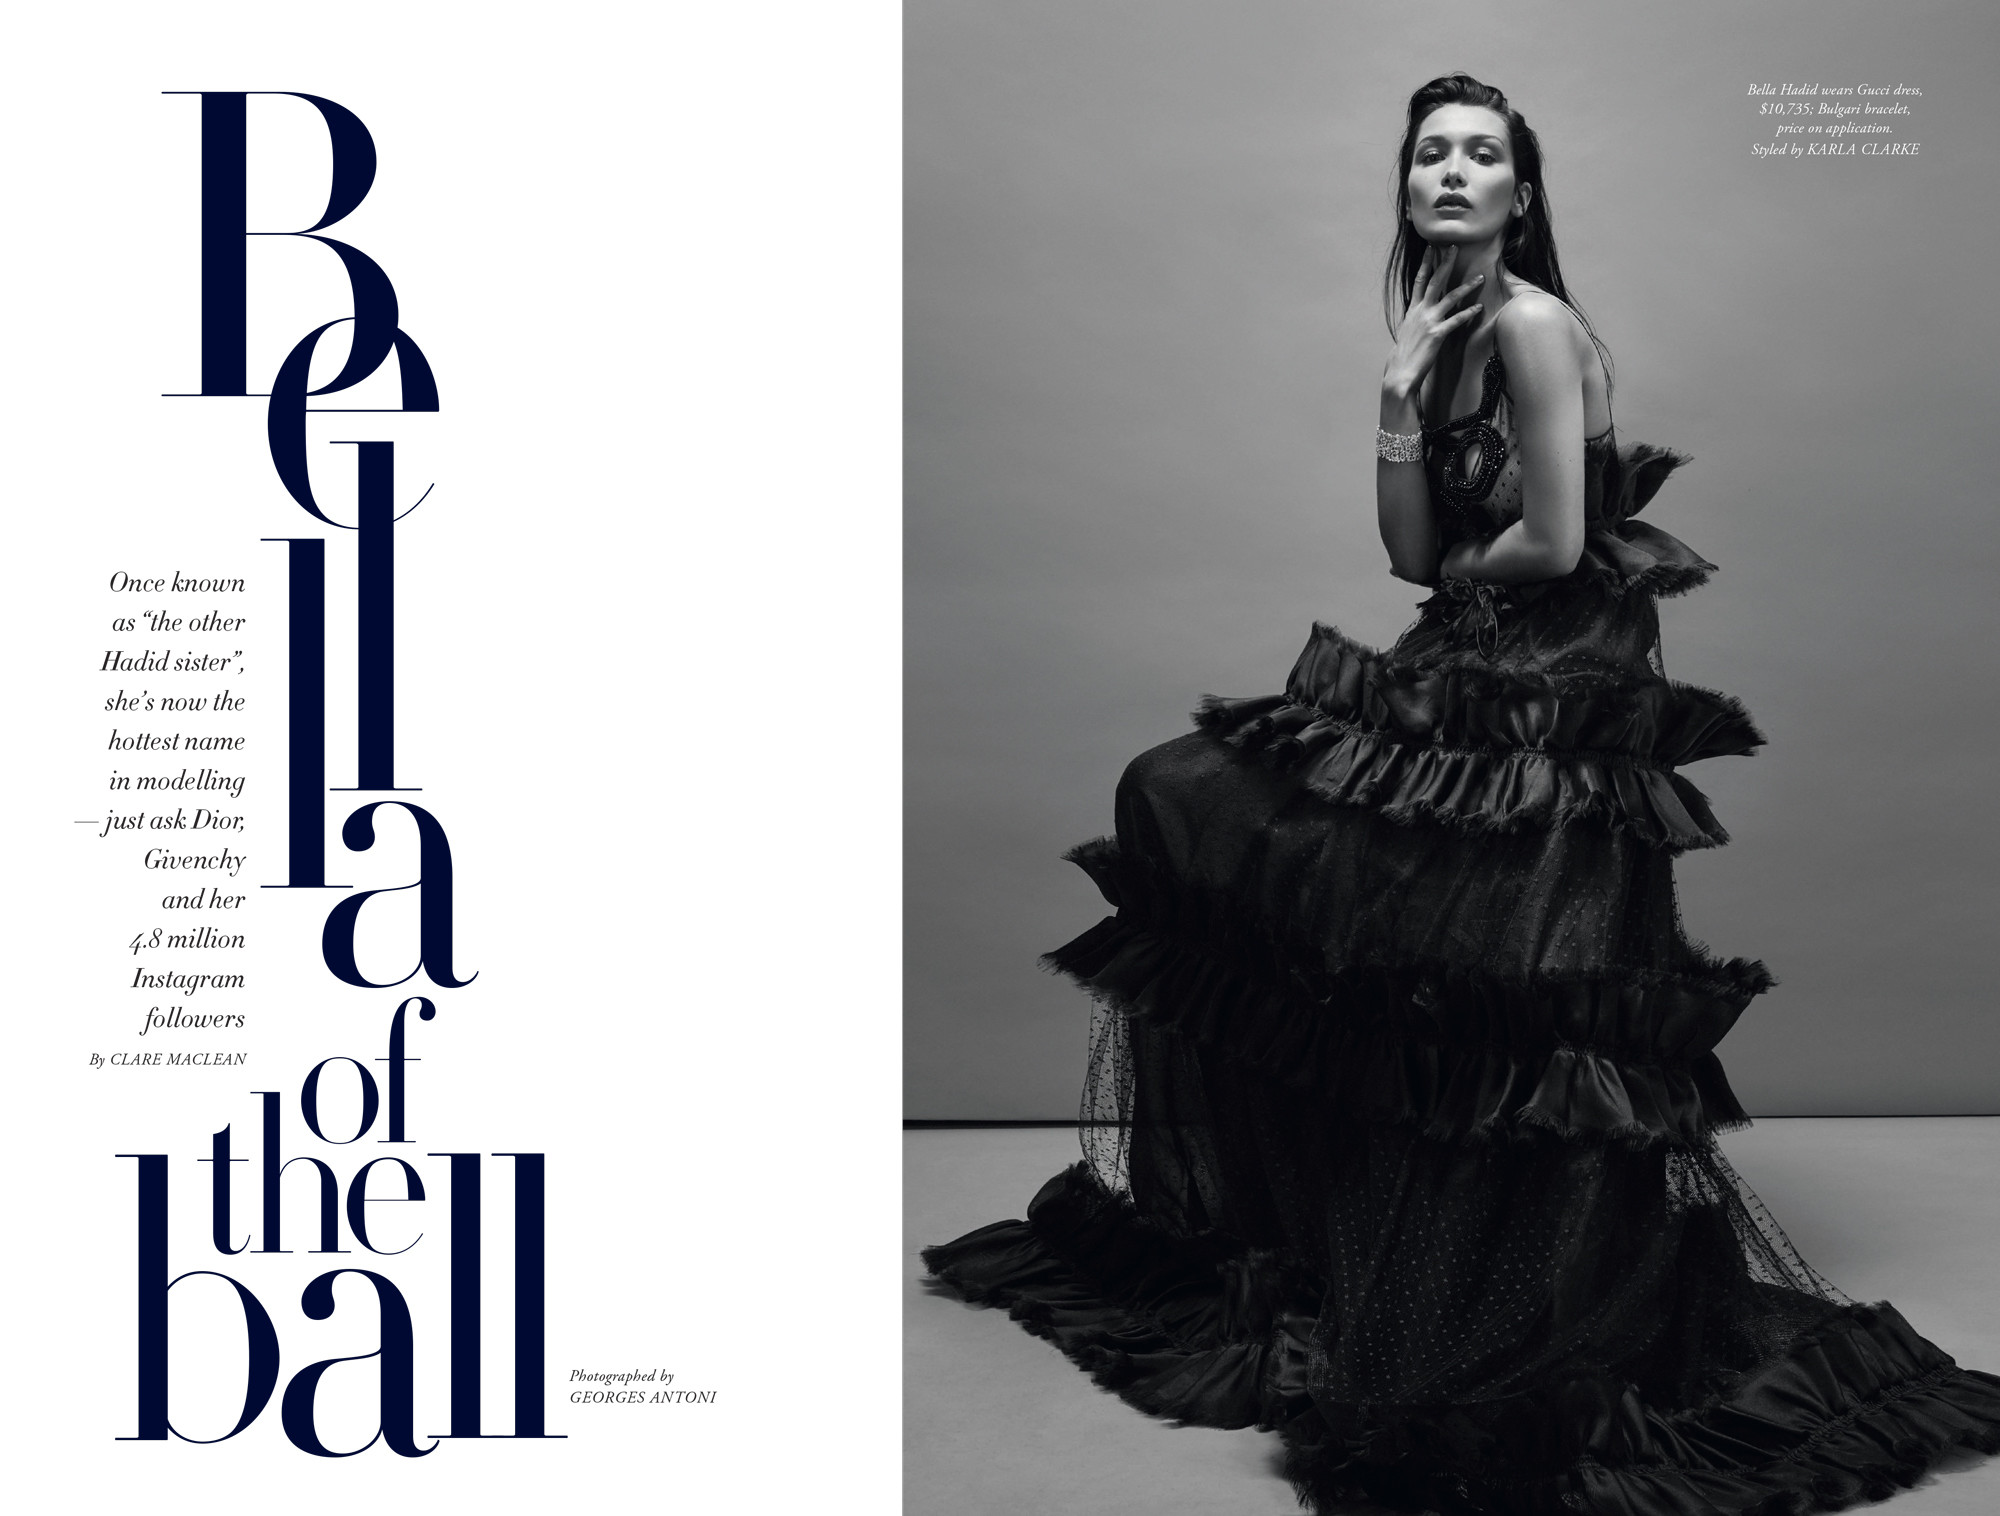 Bella Hadid - Harper's Bazaar Australia